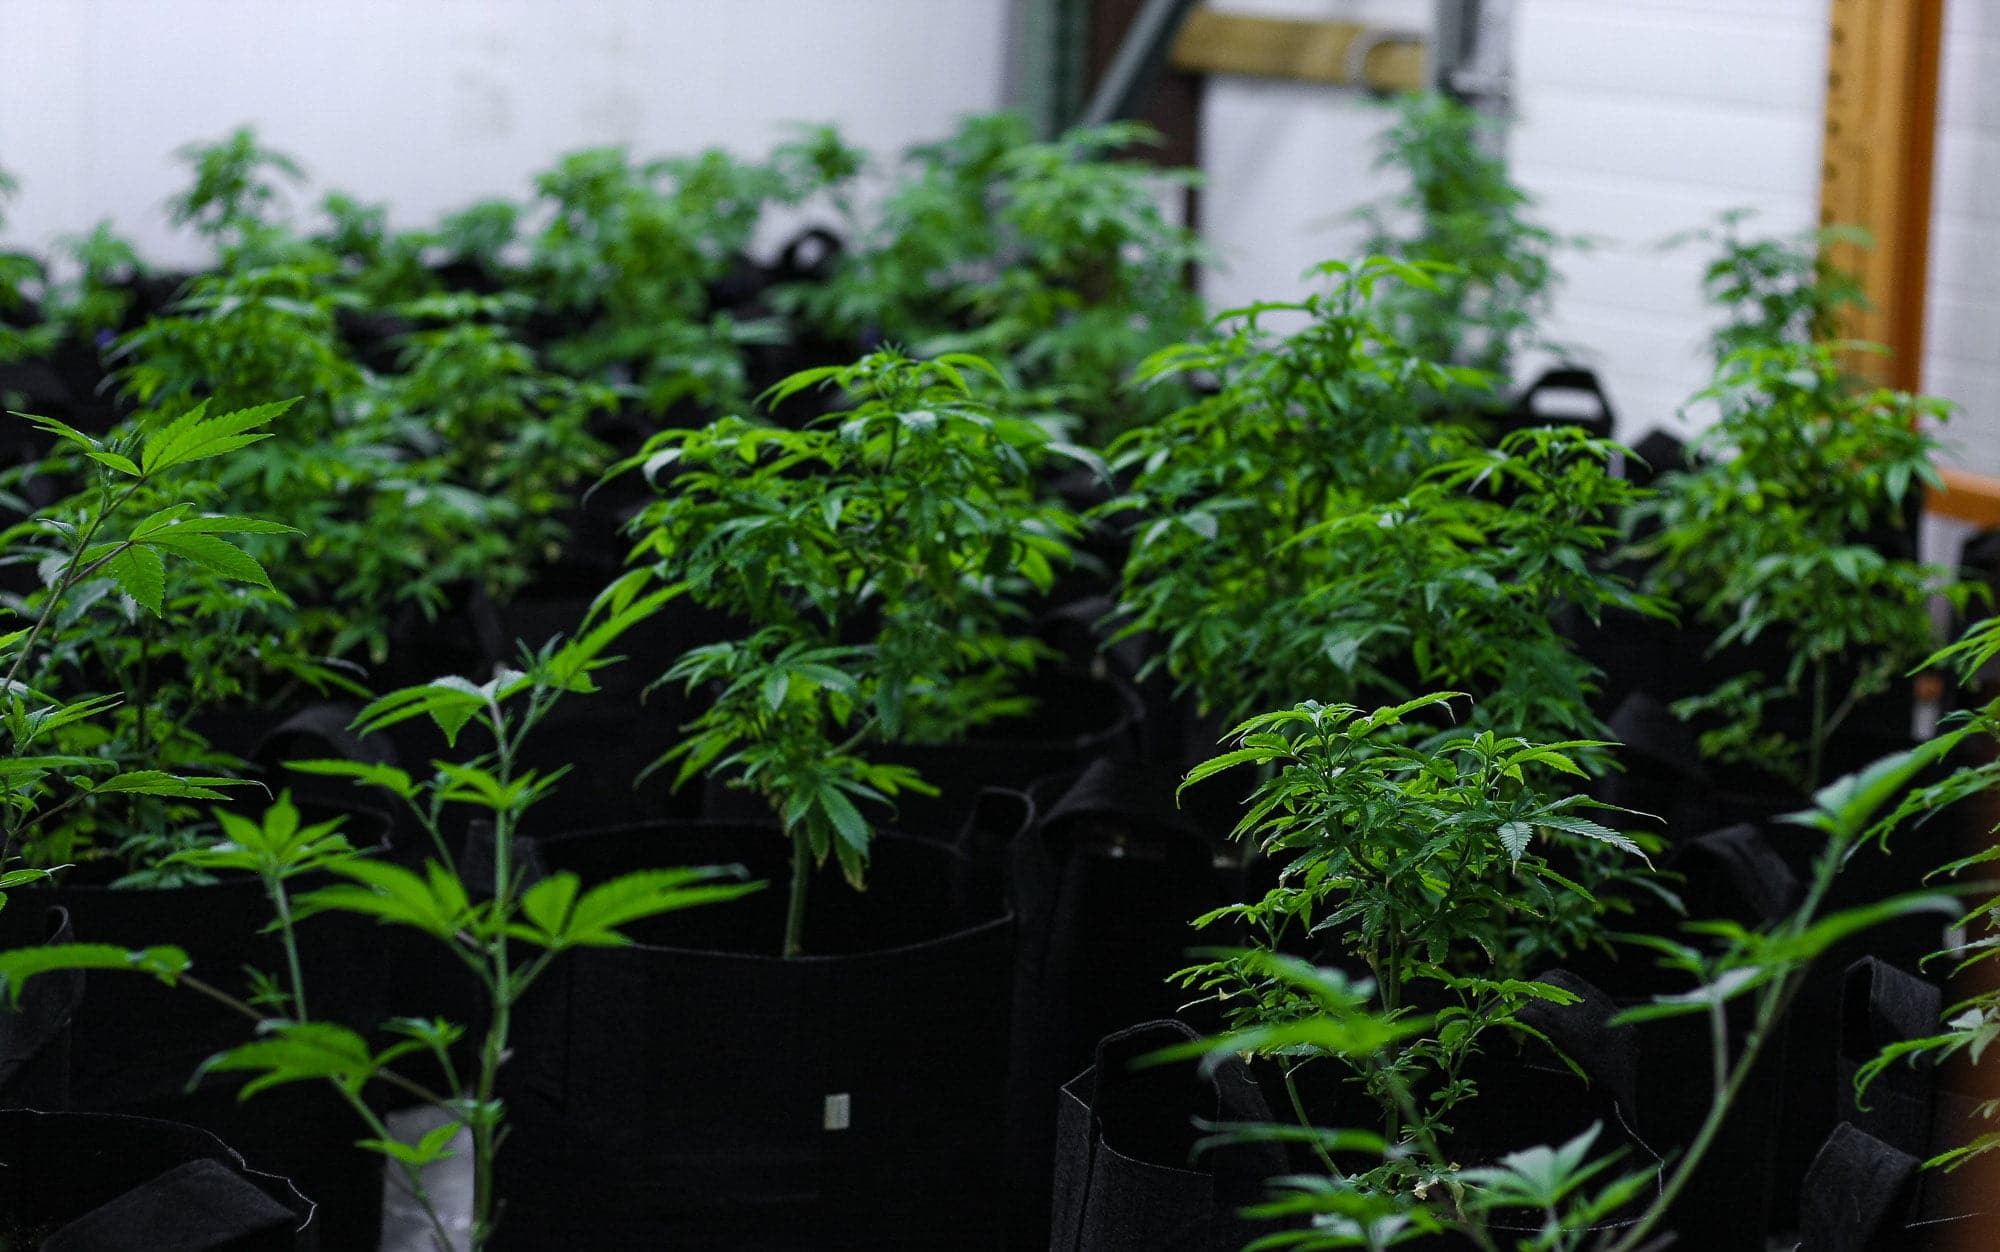 Marijuana plants before budding